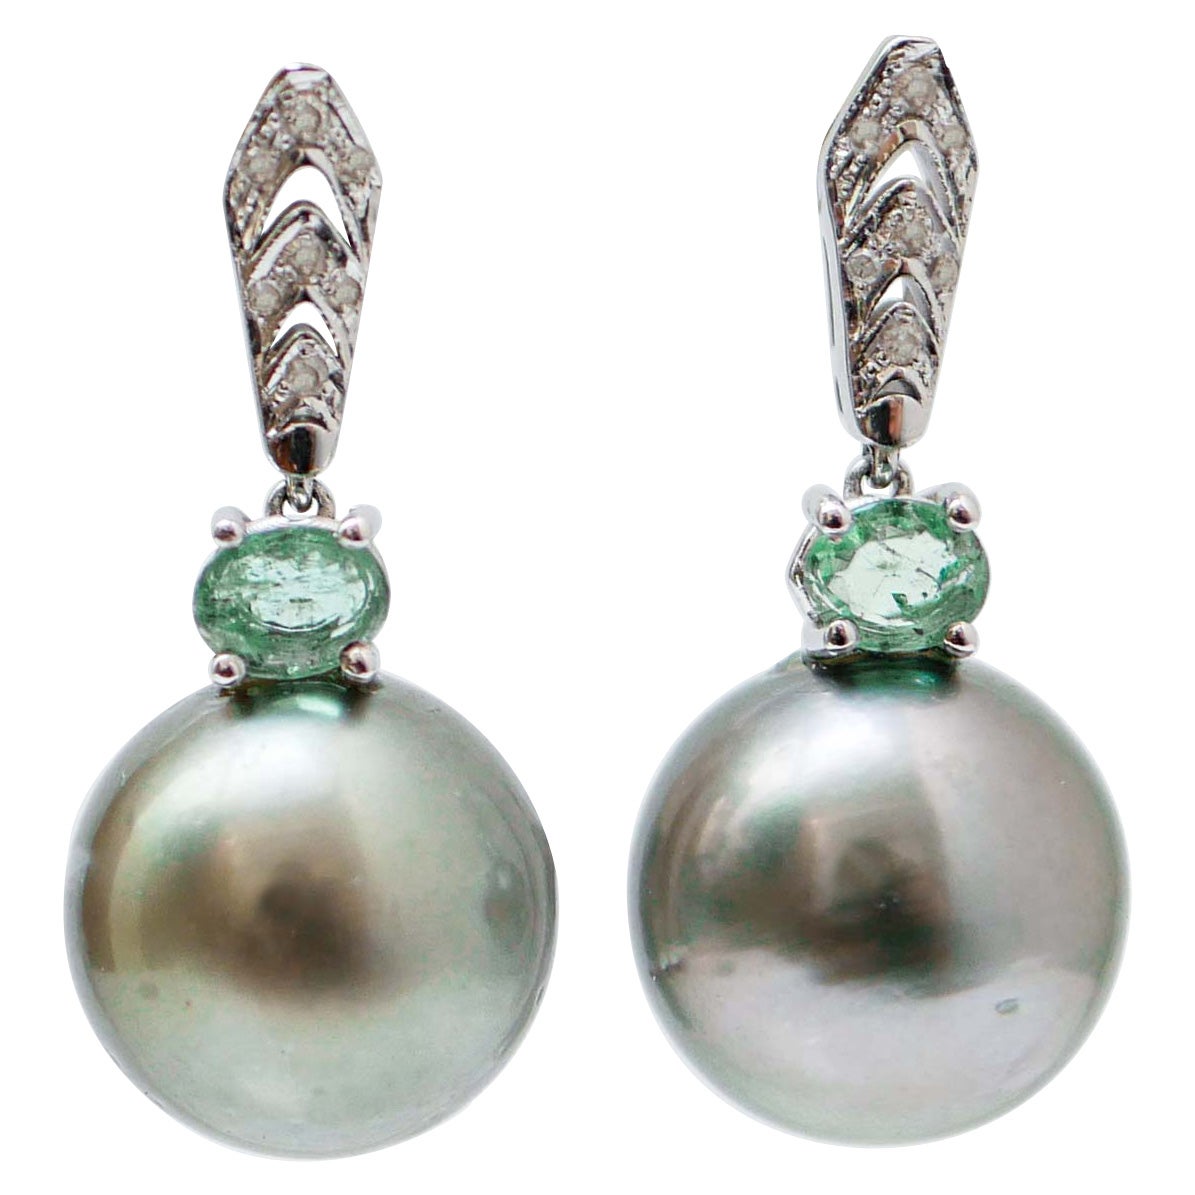 Grey Pearls, Emeralds, Diamonds, 14 Karat White Gold Earrings.